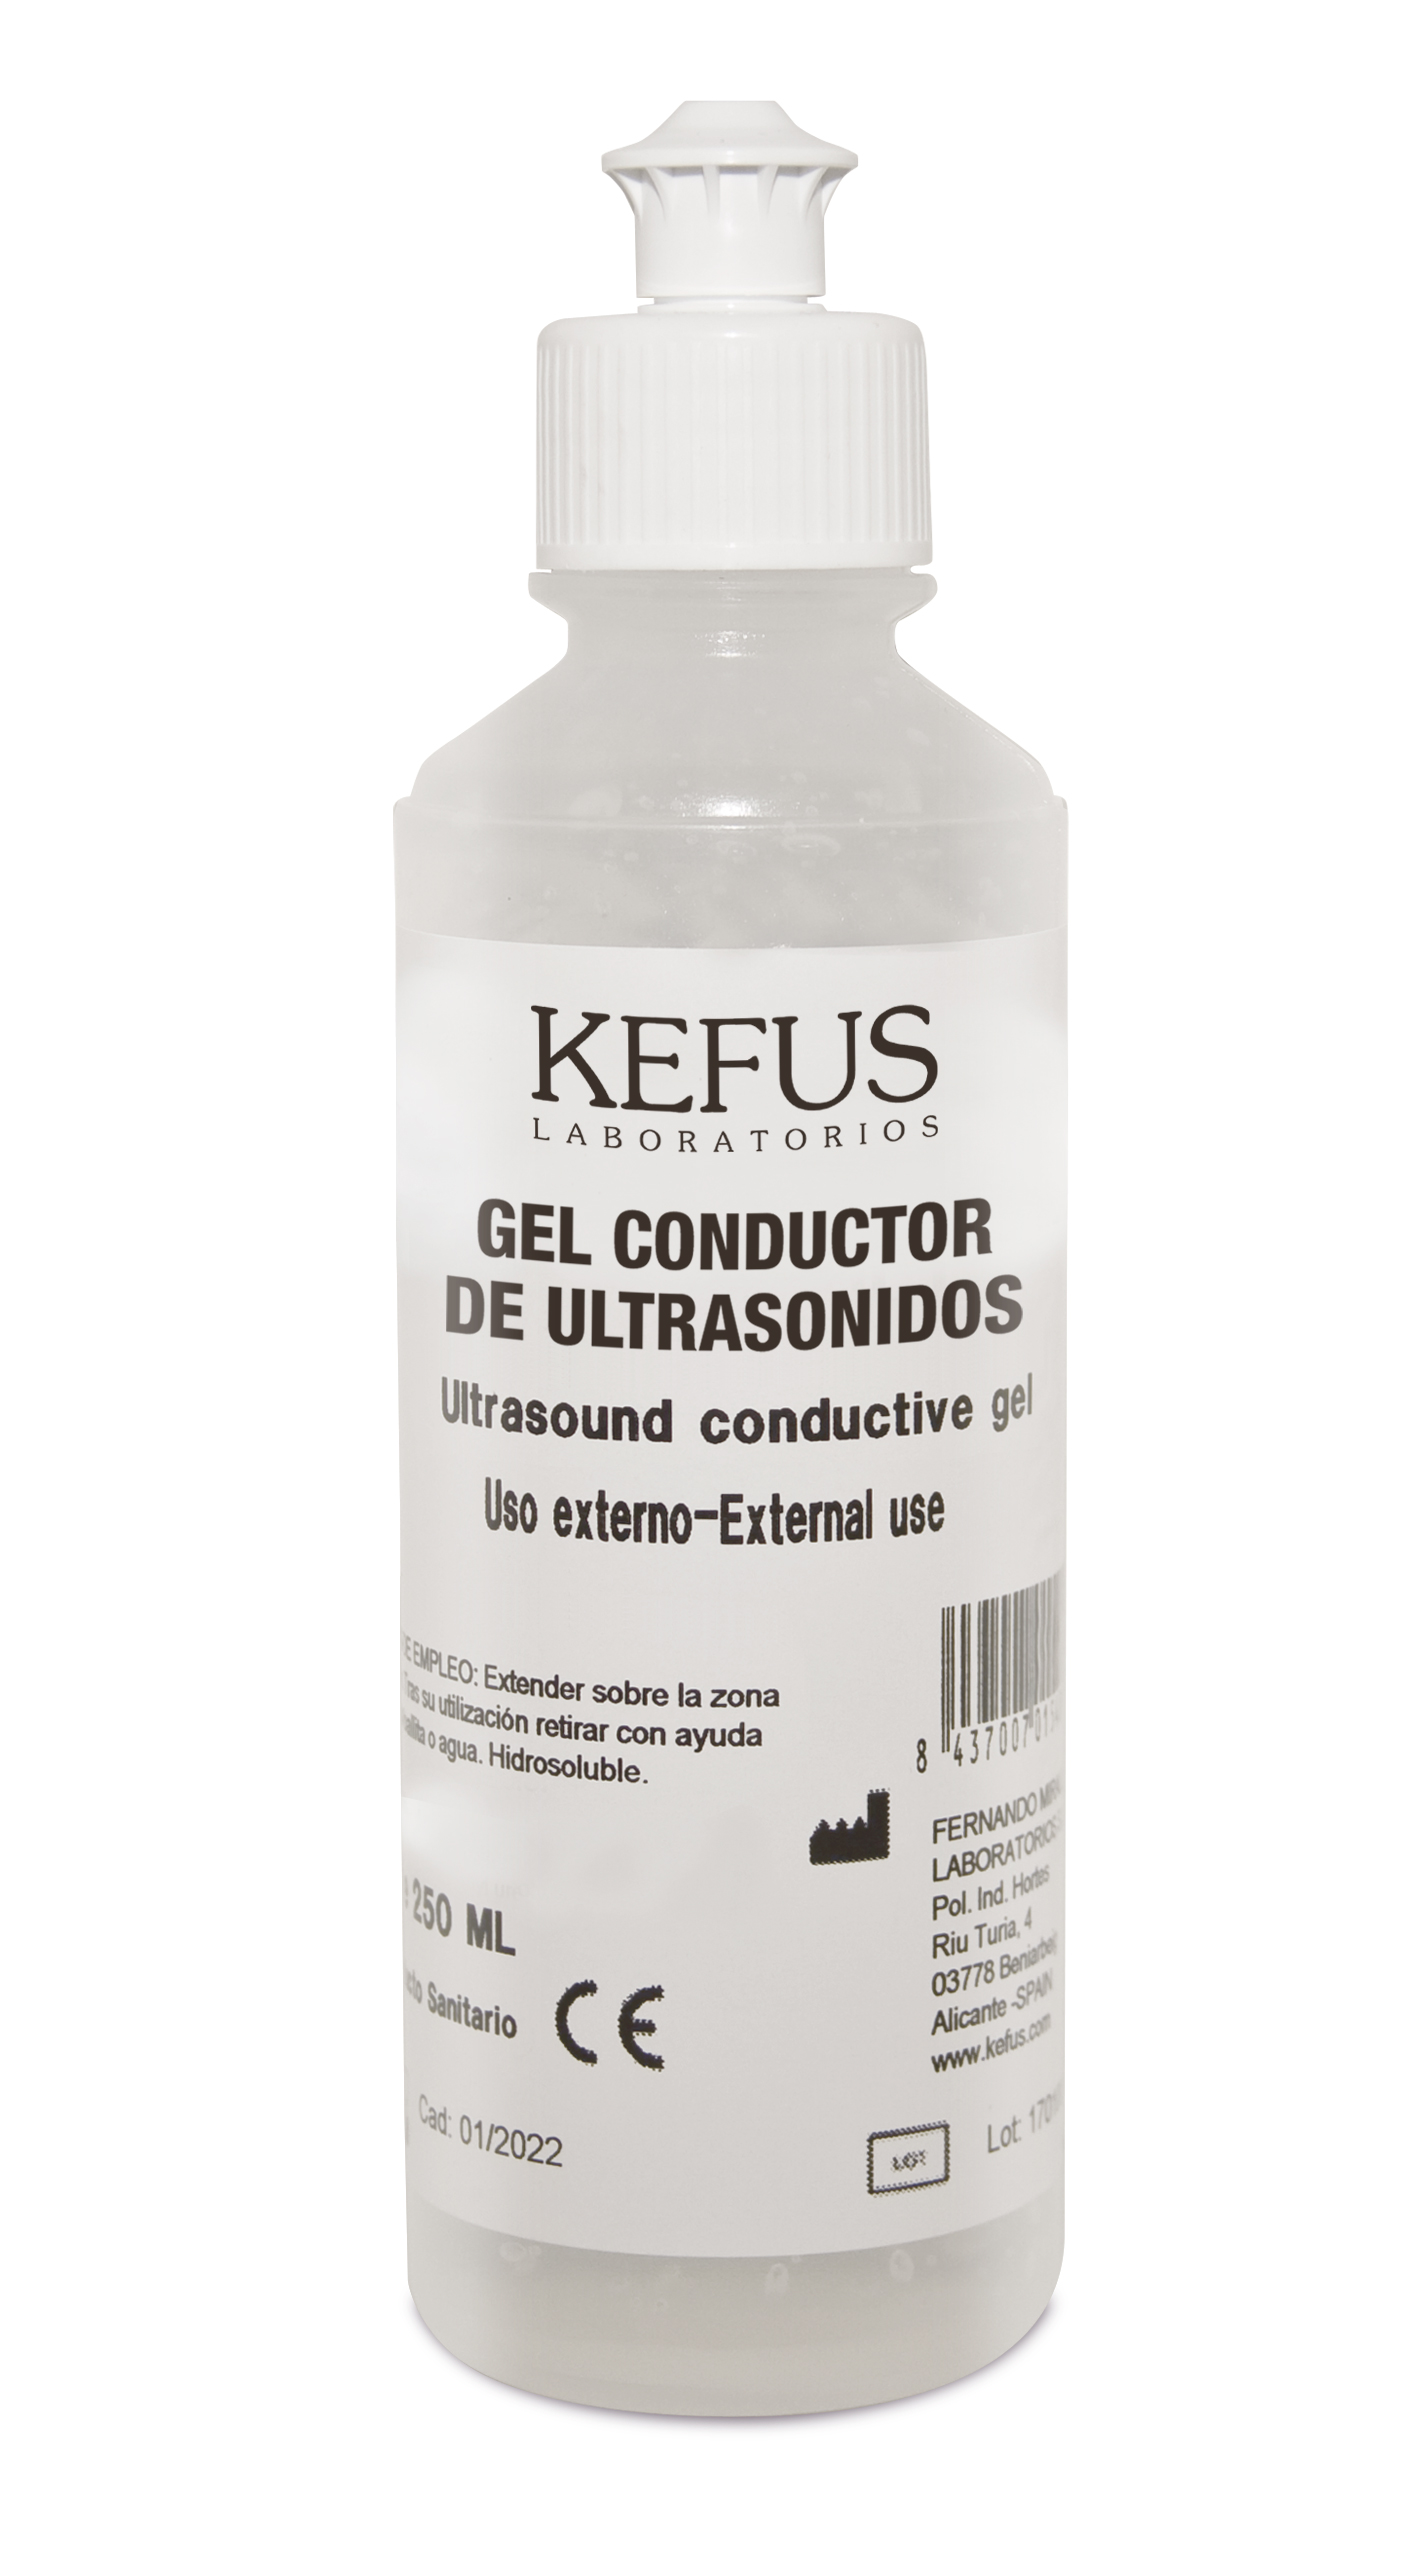 https://farmaciamiralles.com/image/data/gel-conductor-ultrasonidos-kefus.jpg